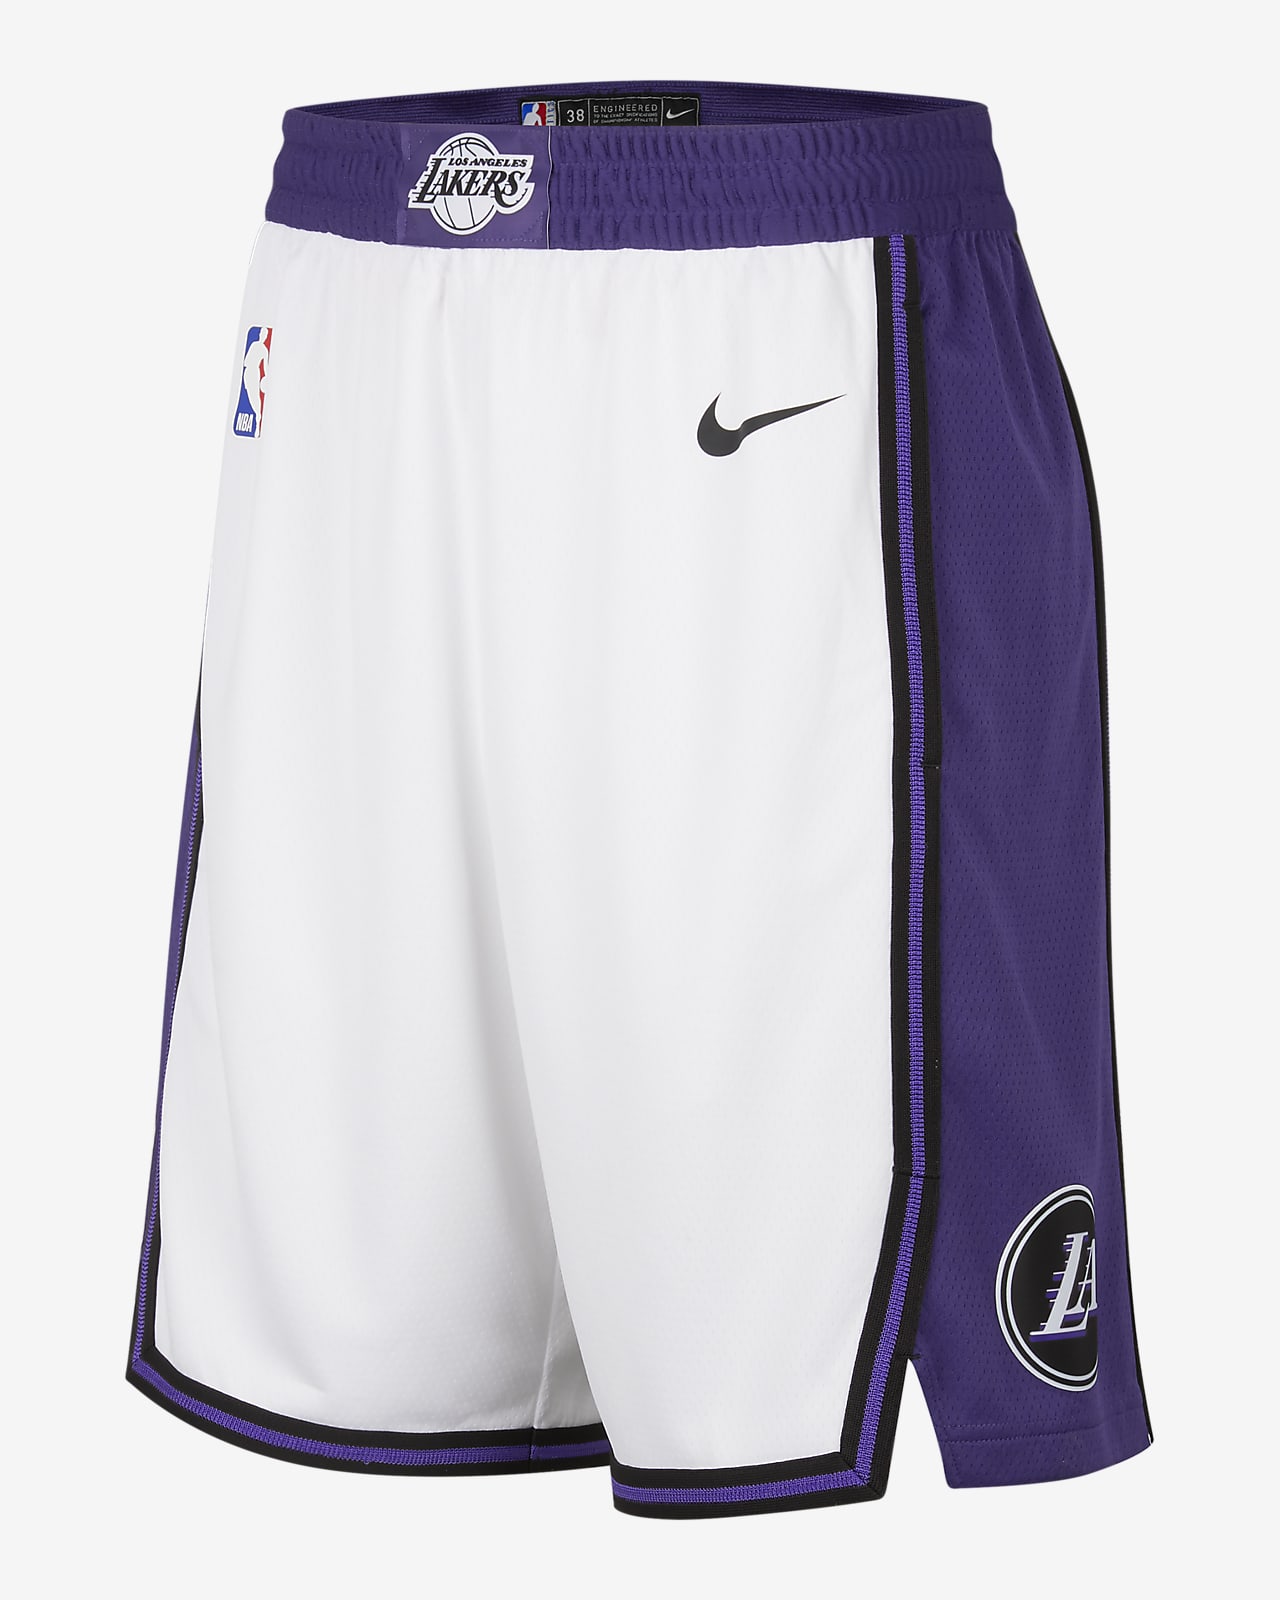 Menos que miseria Cornualles Los Angeles Lakers City Edition Men's Nike Dri-FIT NBA Swingman Shorts.  Nike.com